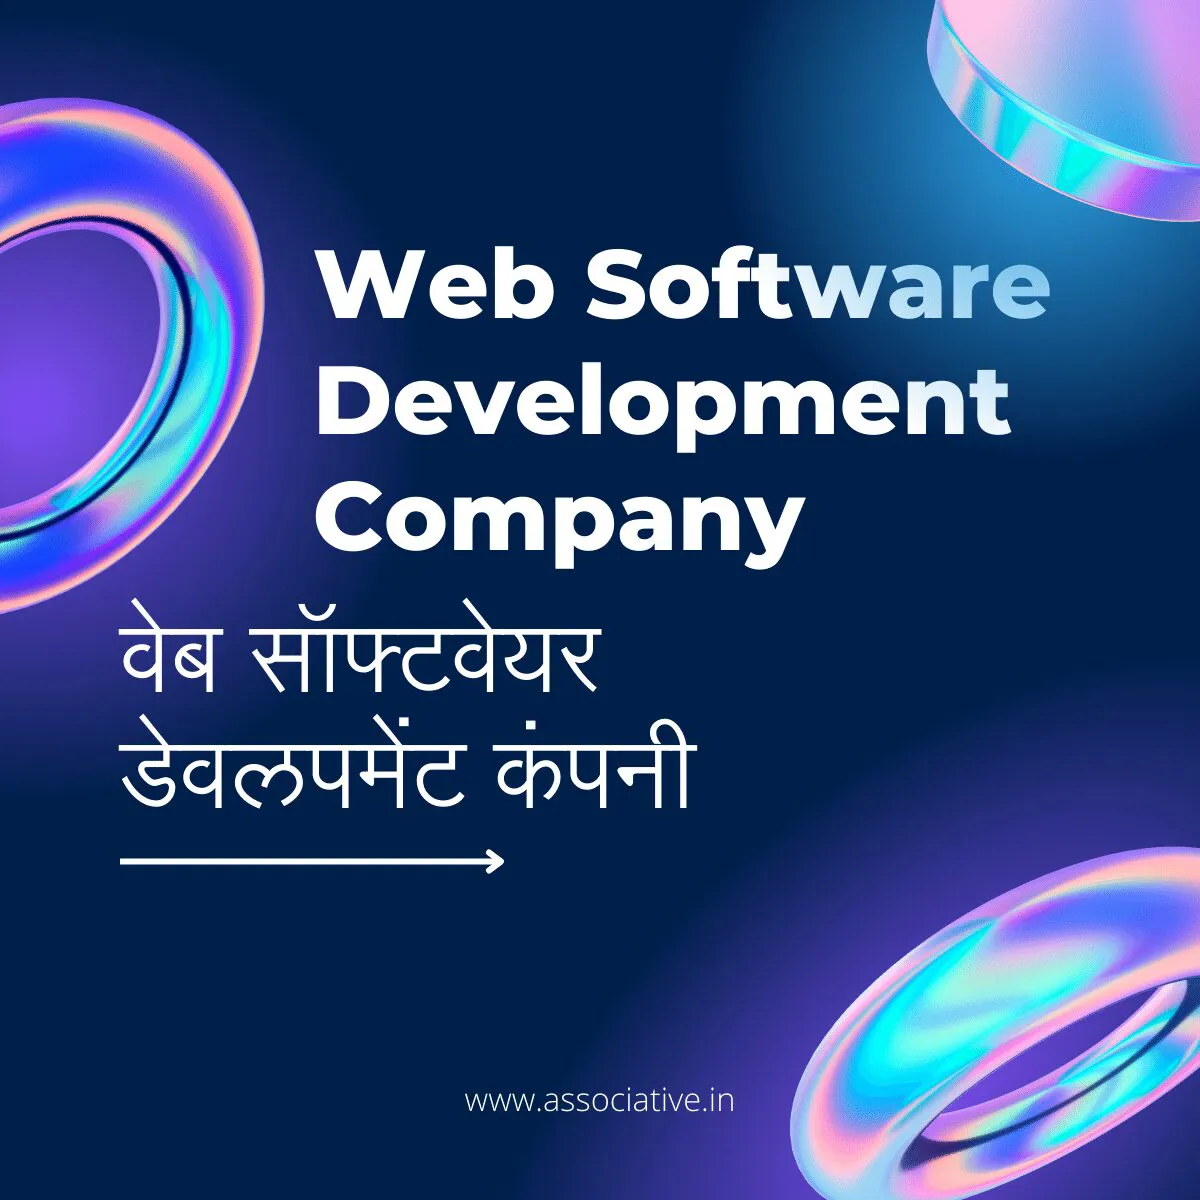 Web Software Development Company